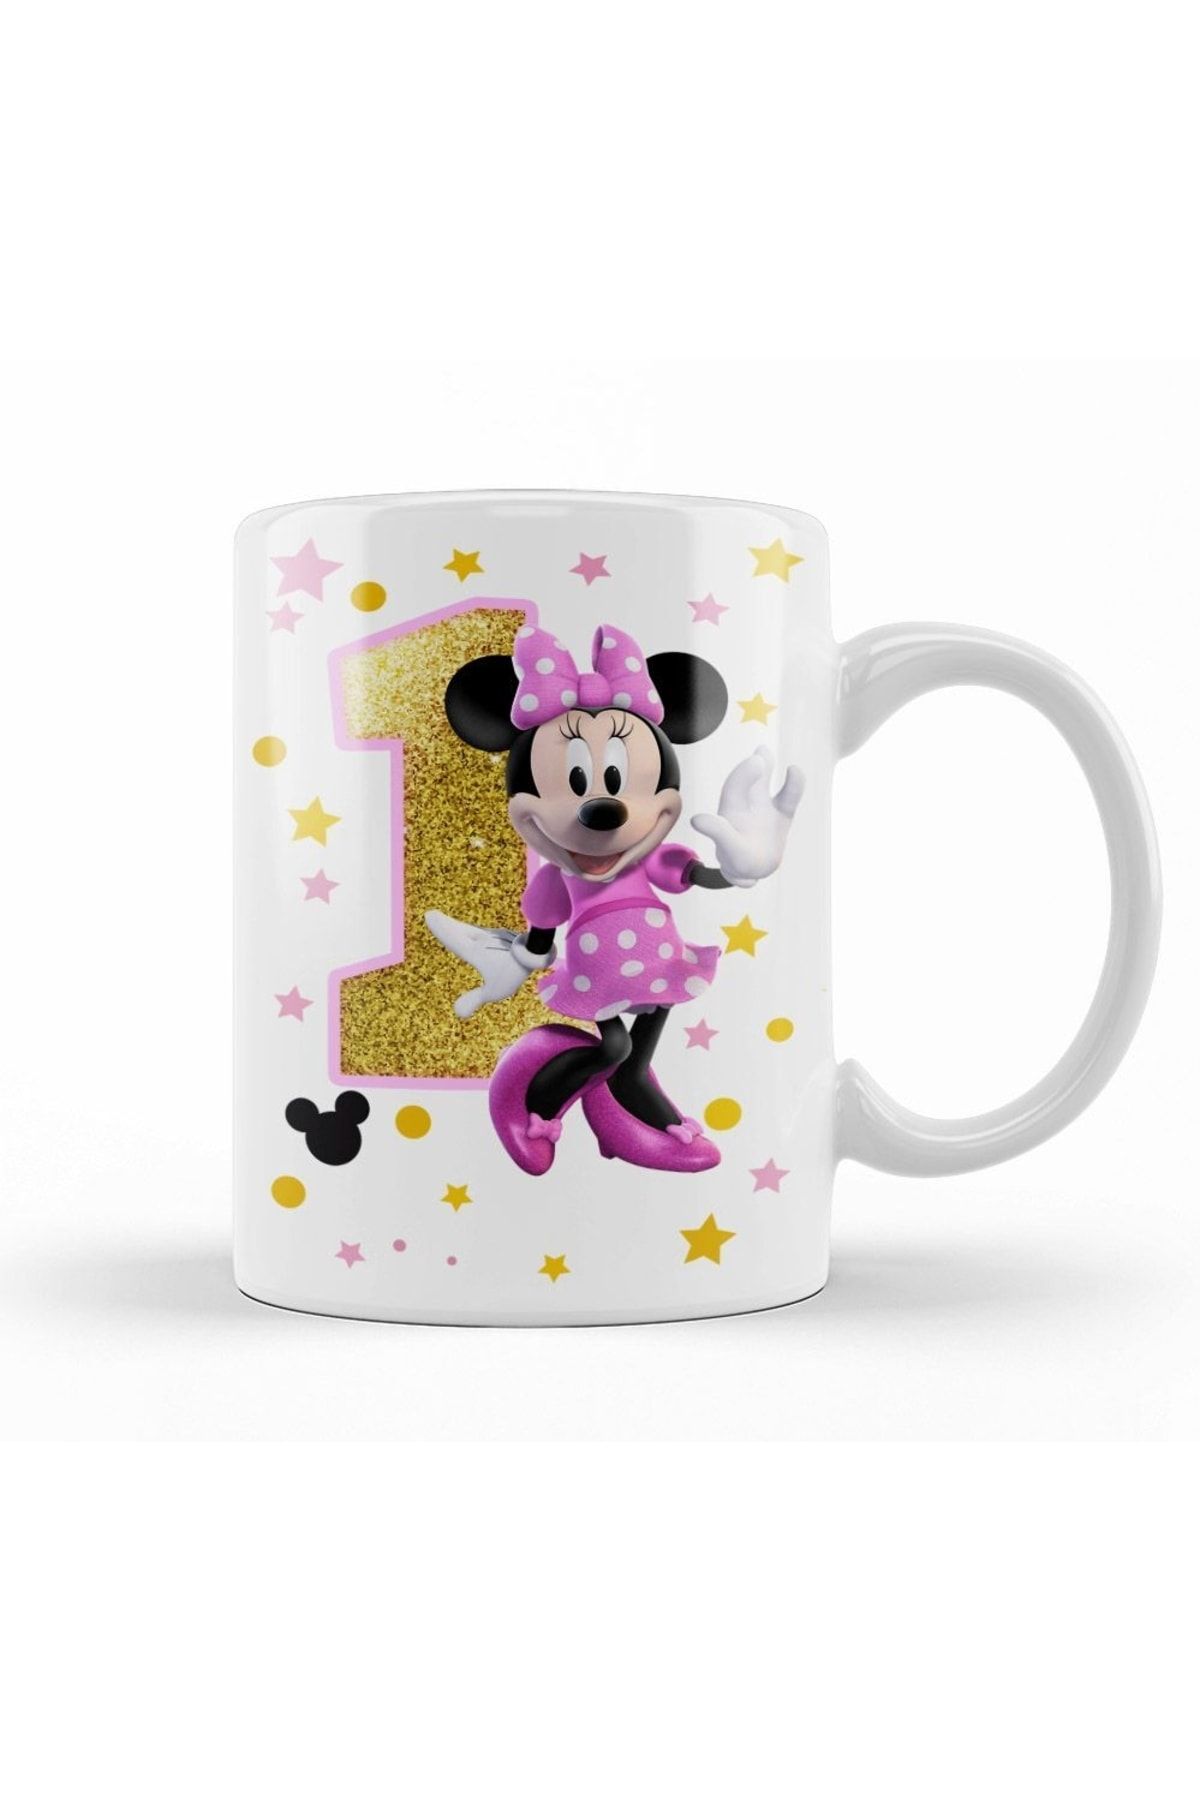 Humuts Mini Fare Minnie Mouse 1 Bir Yaş Hediyesi Kupa Bardak Porselen